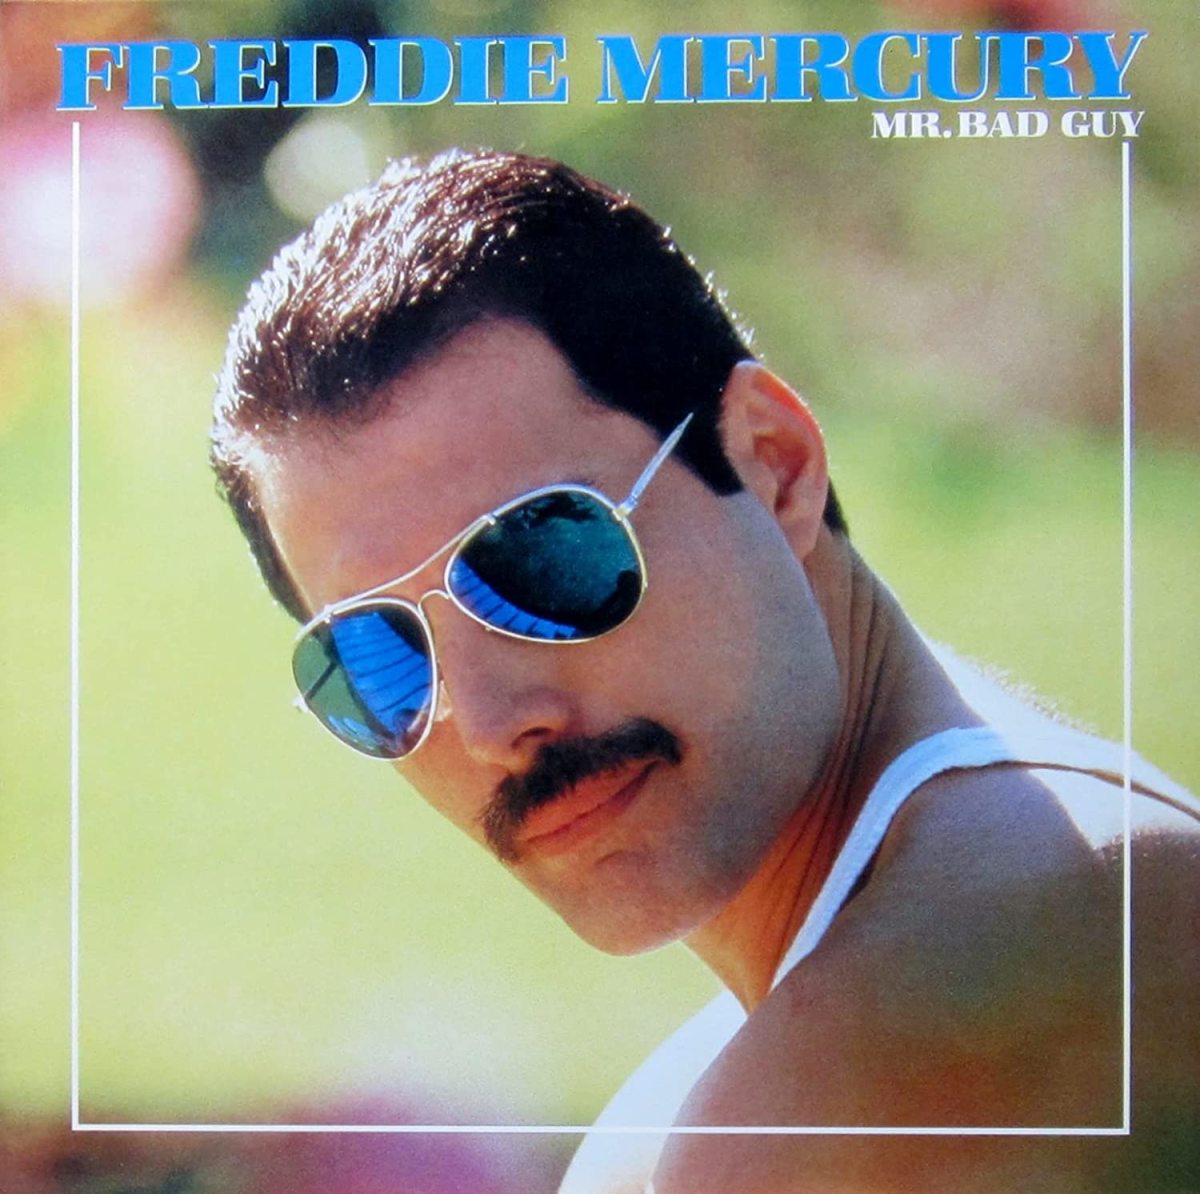 Freddie Mercury's only proper solo album is "Mr. Bad Guy" (1985).